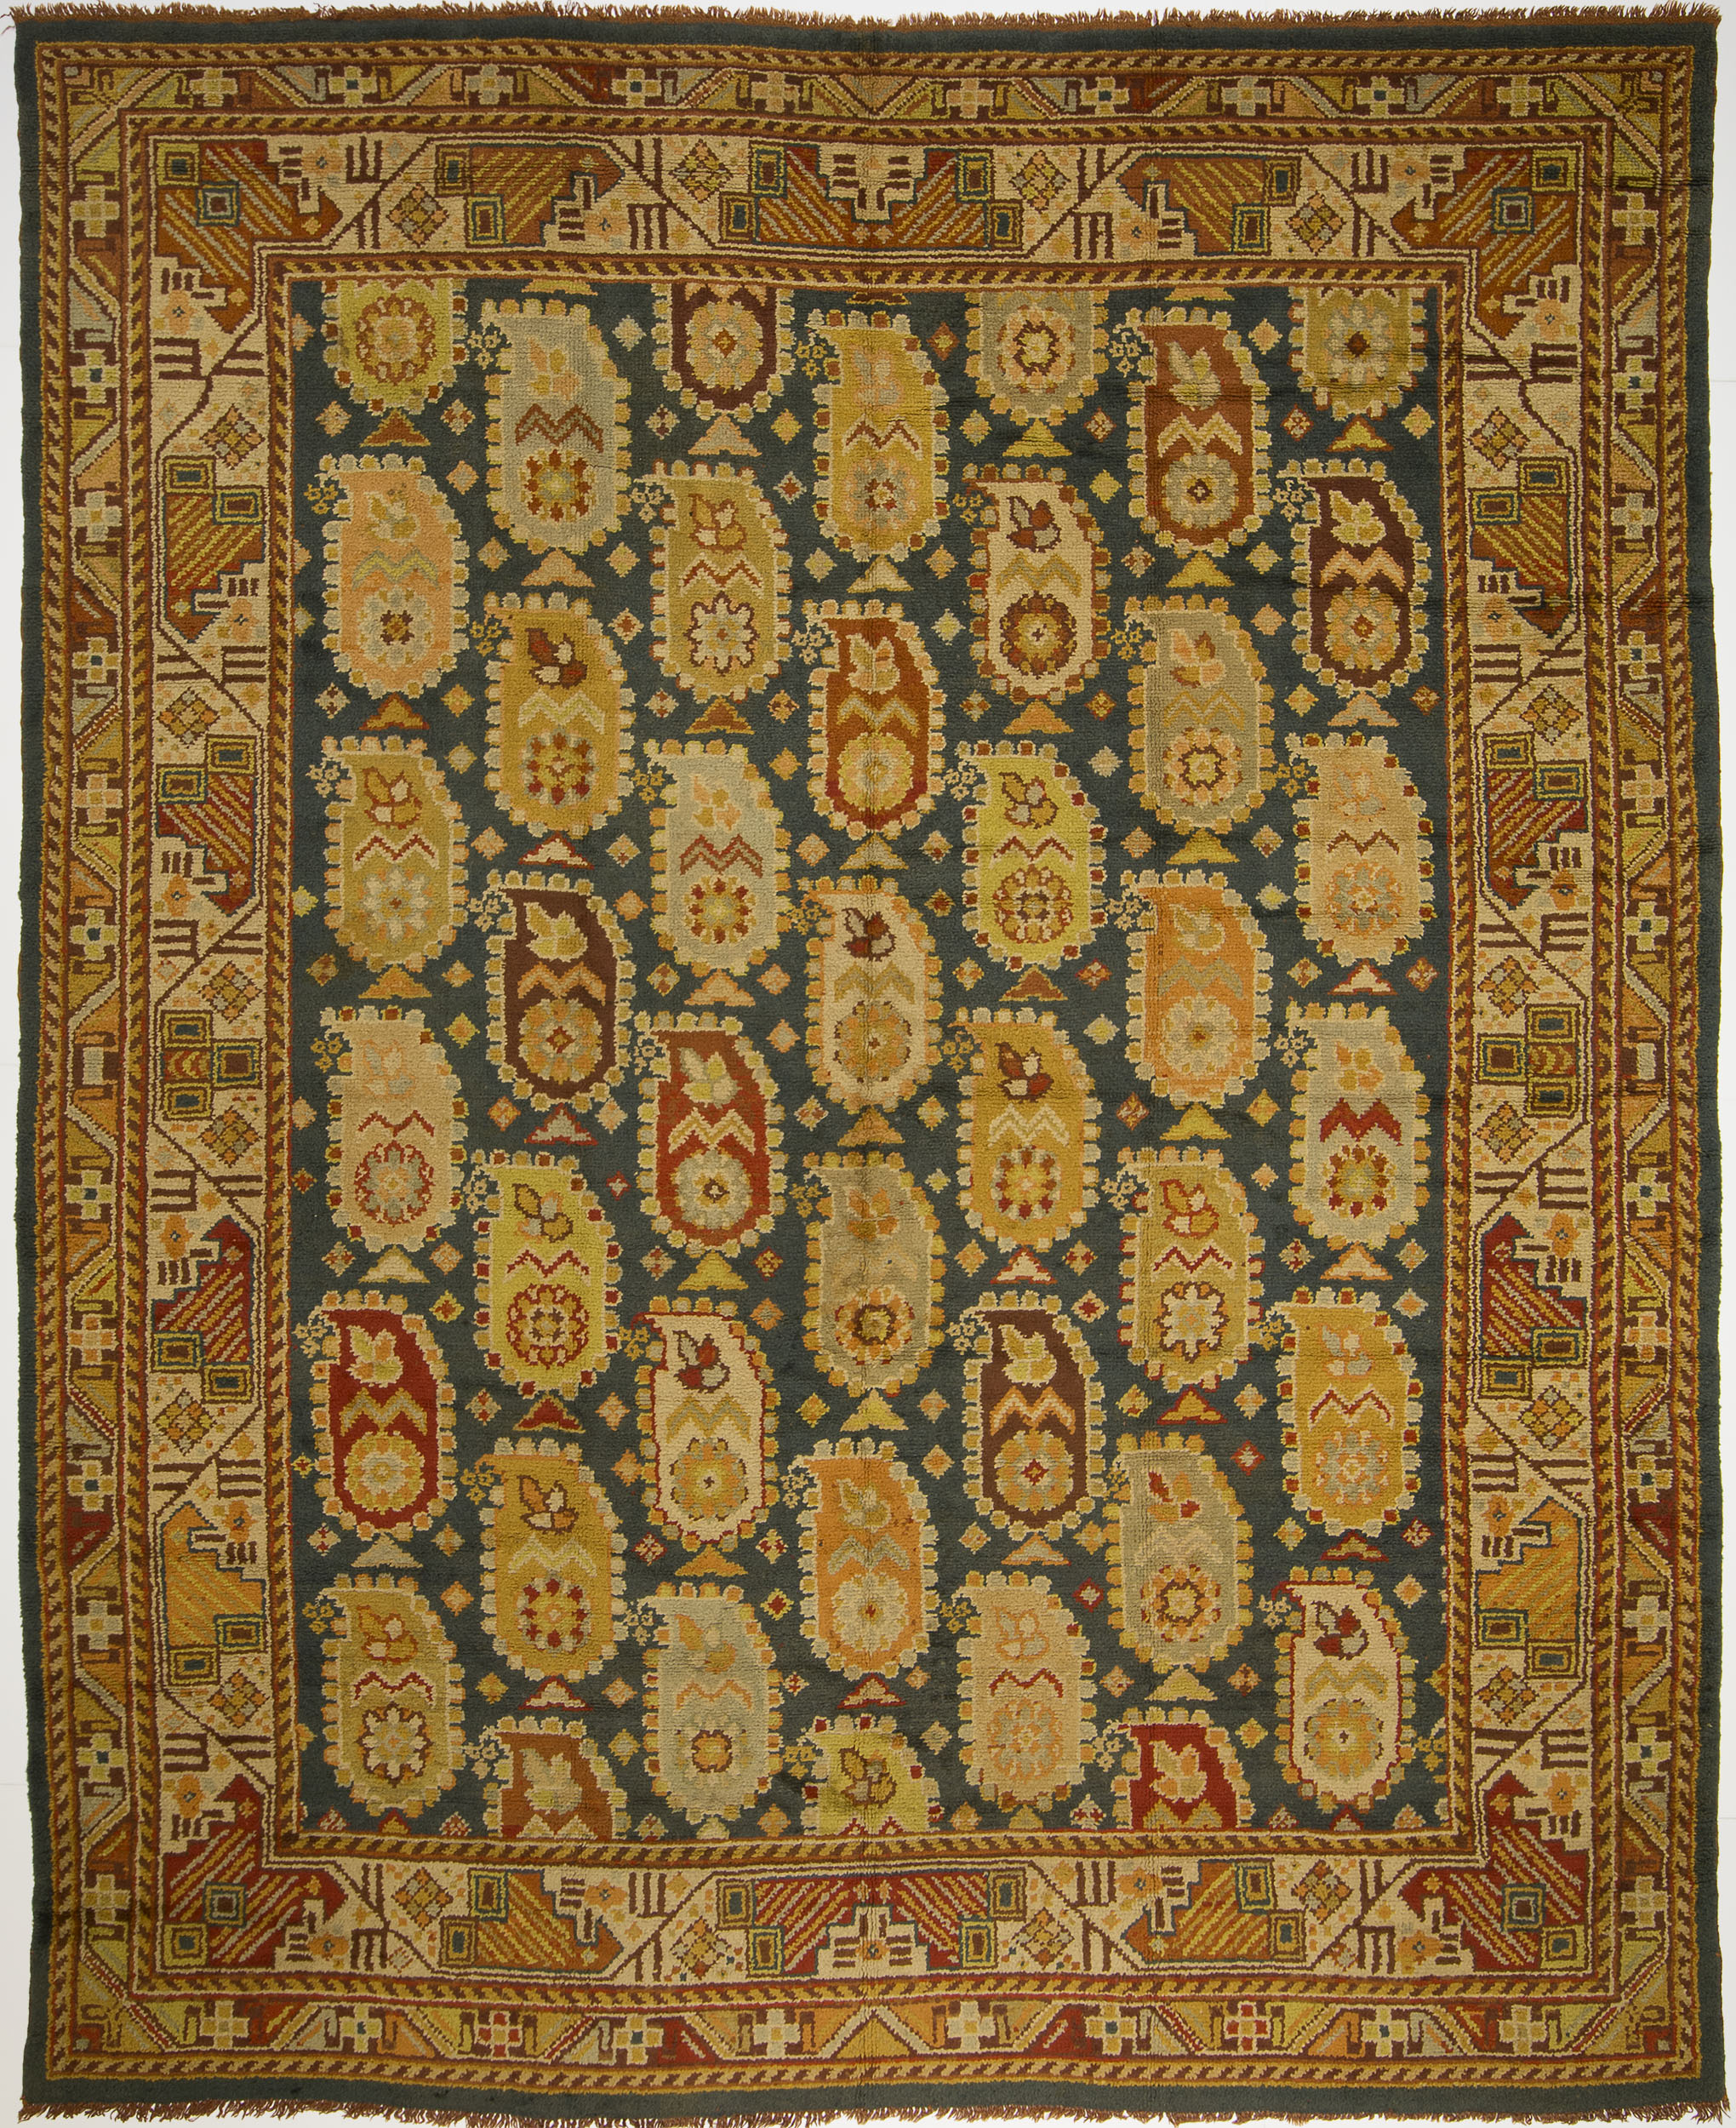 Donegal Carpet 14' 5" x 11' 8" 